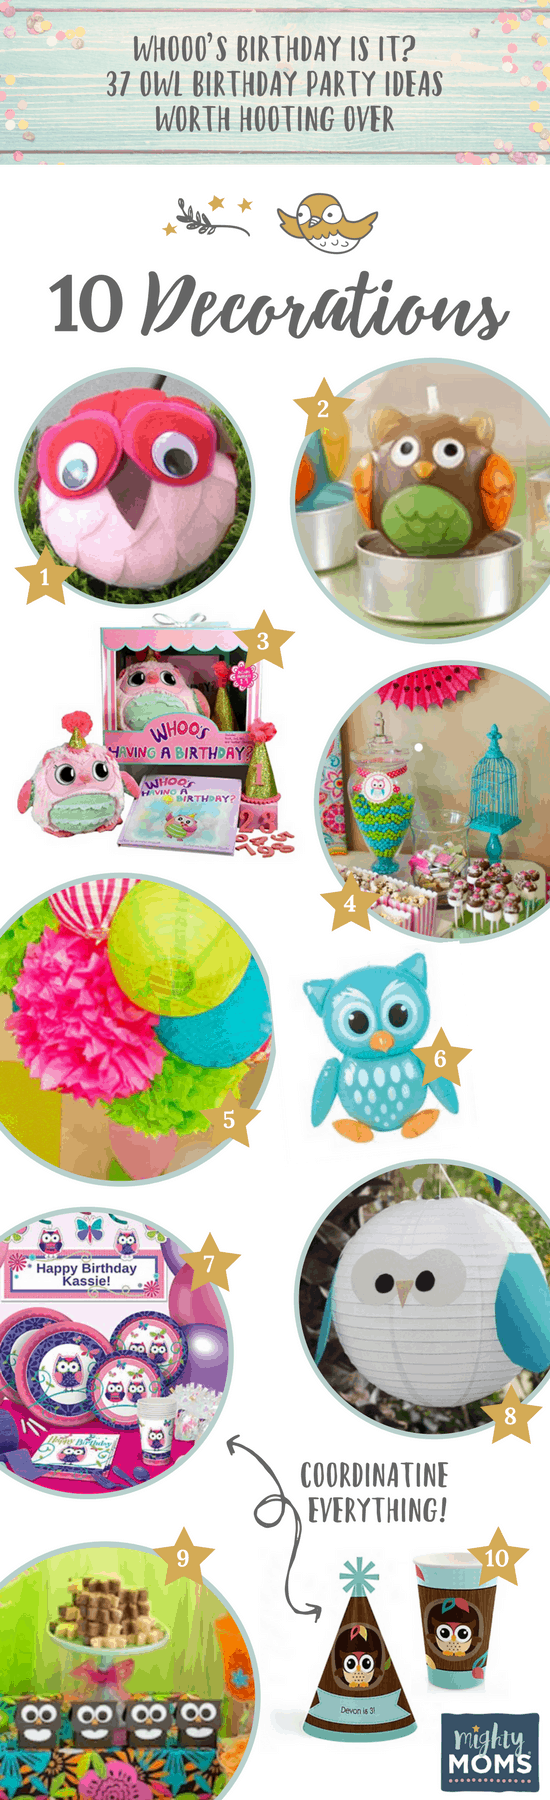 10 Decoration Ideas for an Owl Birthday Party - MightyMoms.club